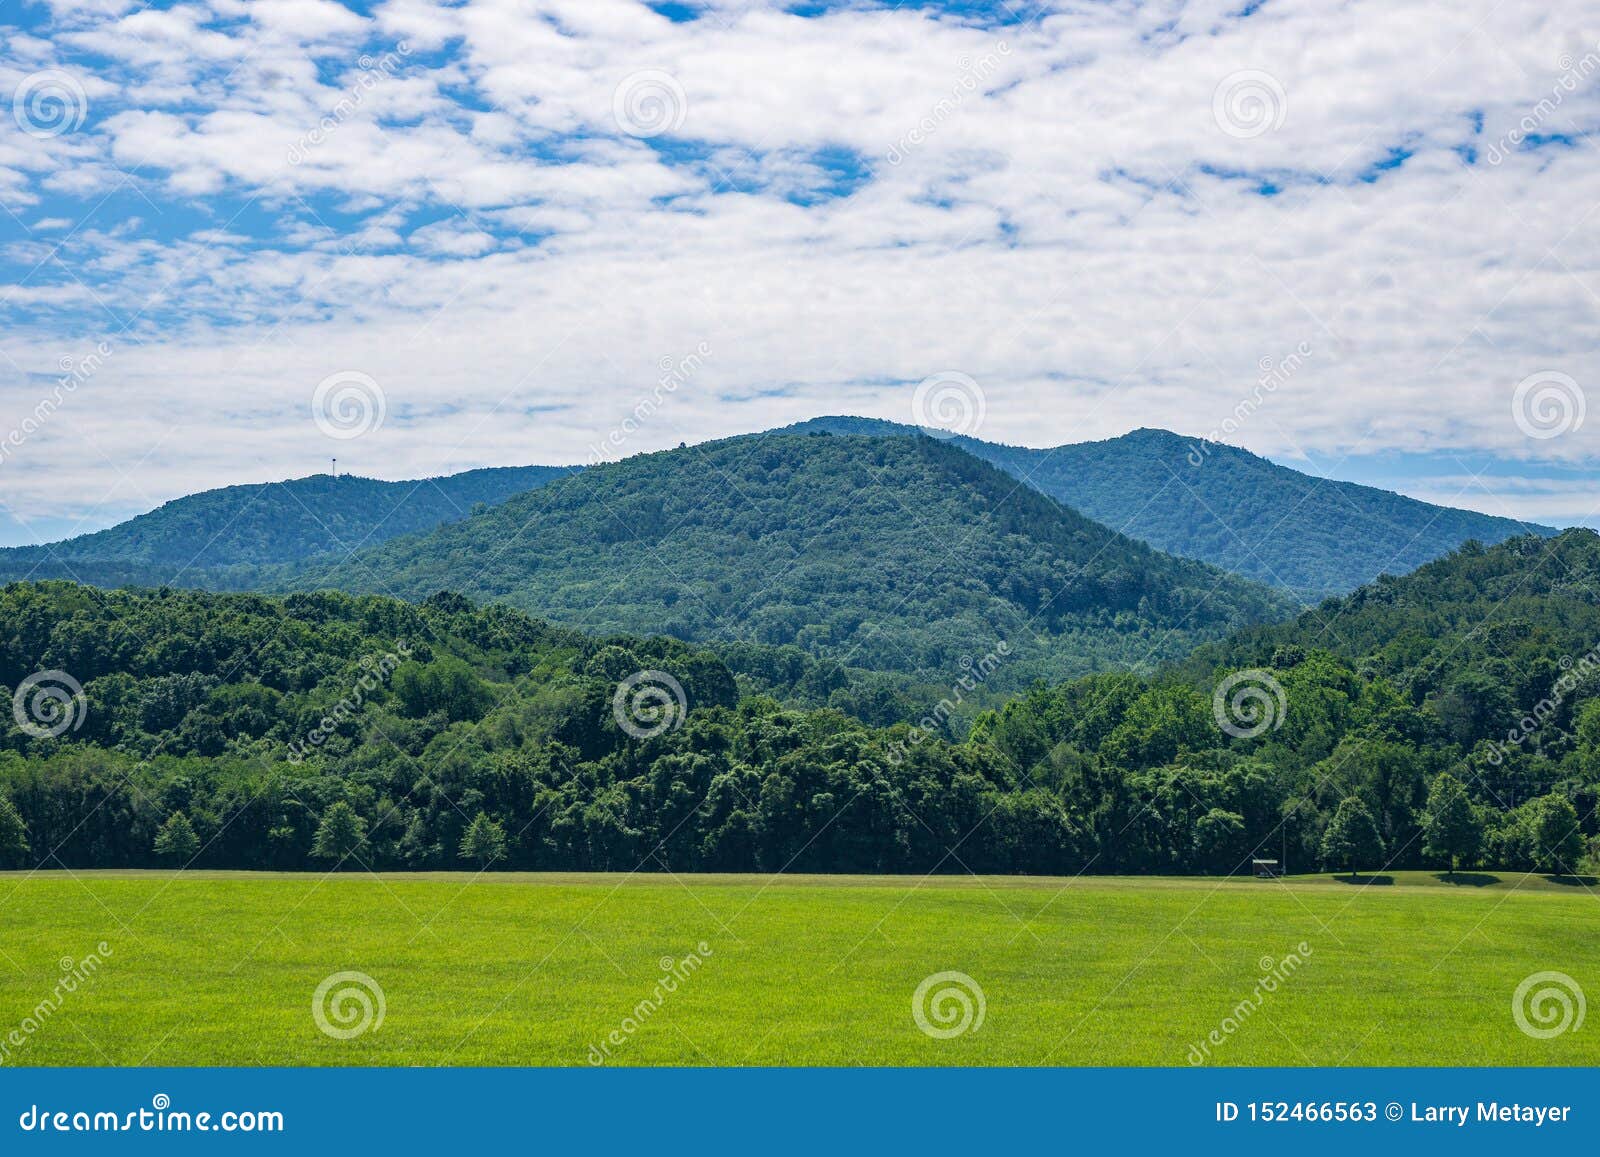 Blue Ridge Mountains of Virginia, USA Stock Image - Image landscape, mountians: 152466563